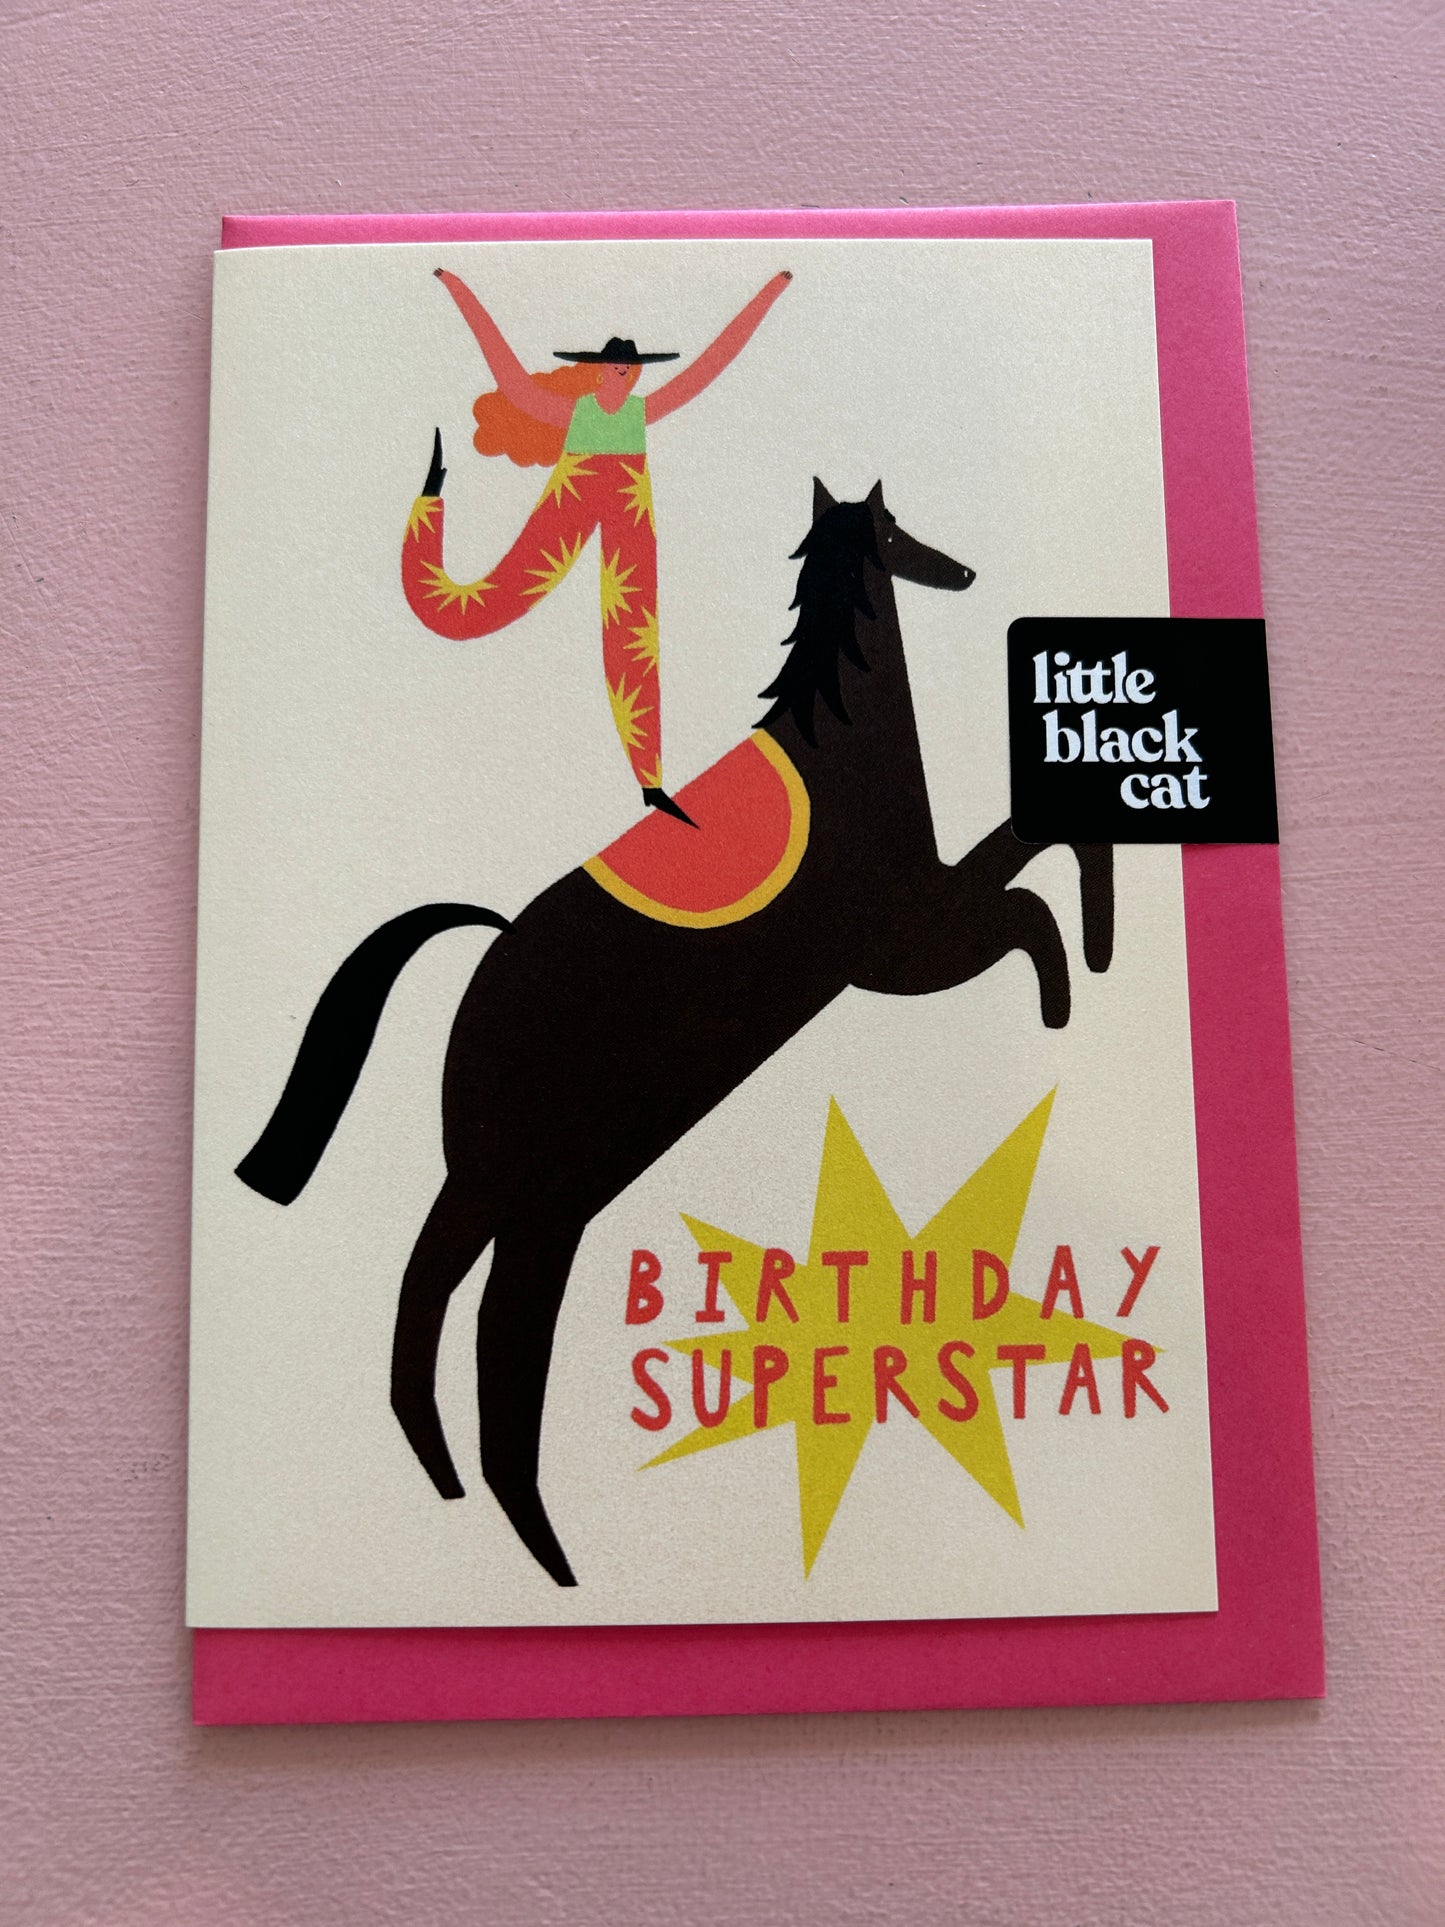 Little Black Cat - Superstar Birthday Card